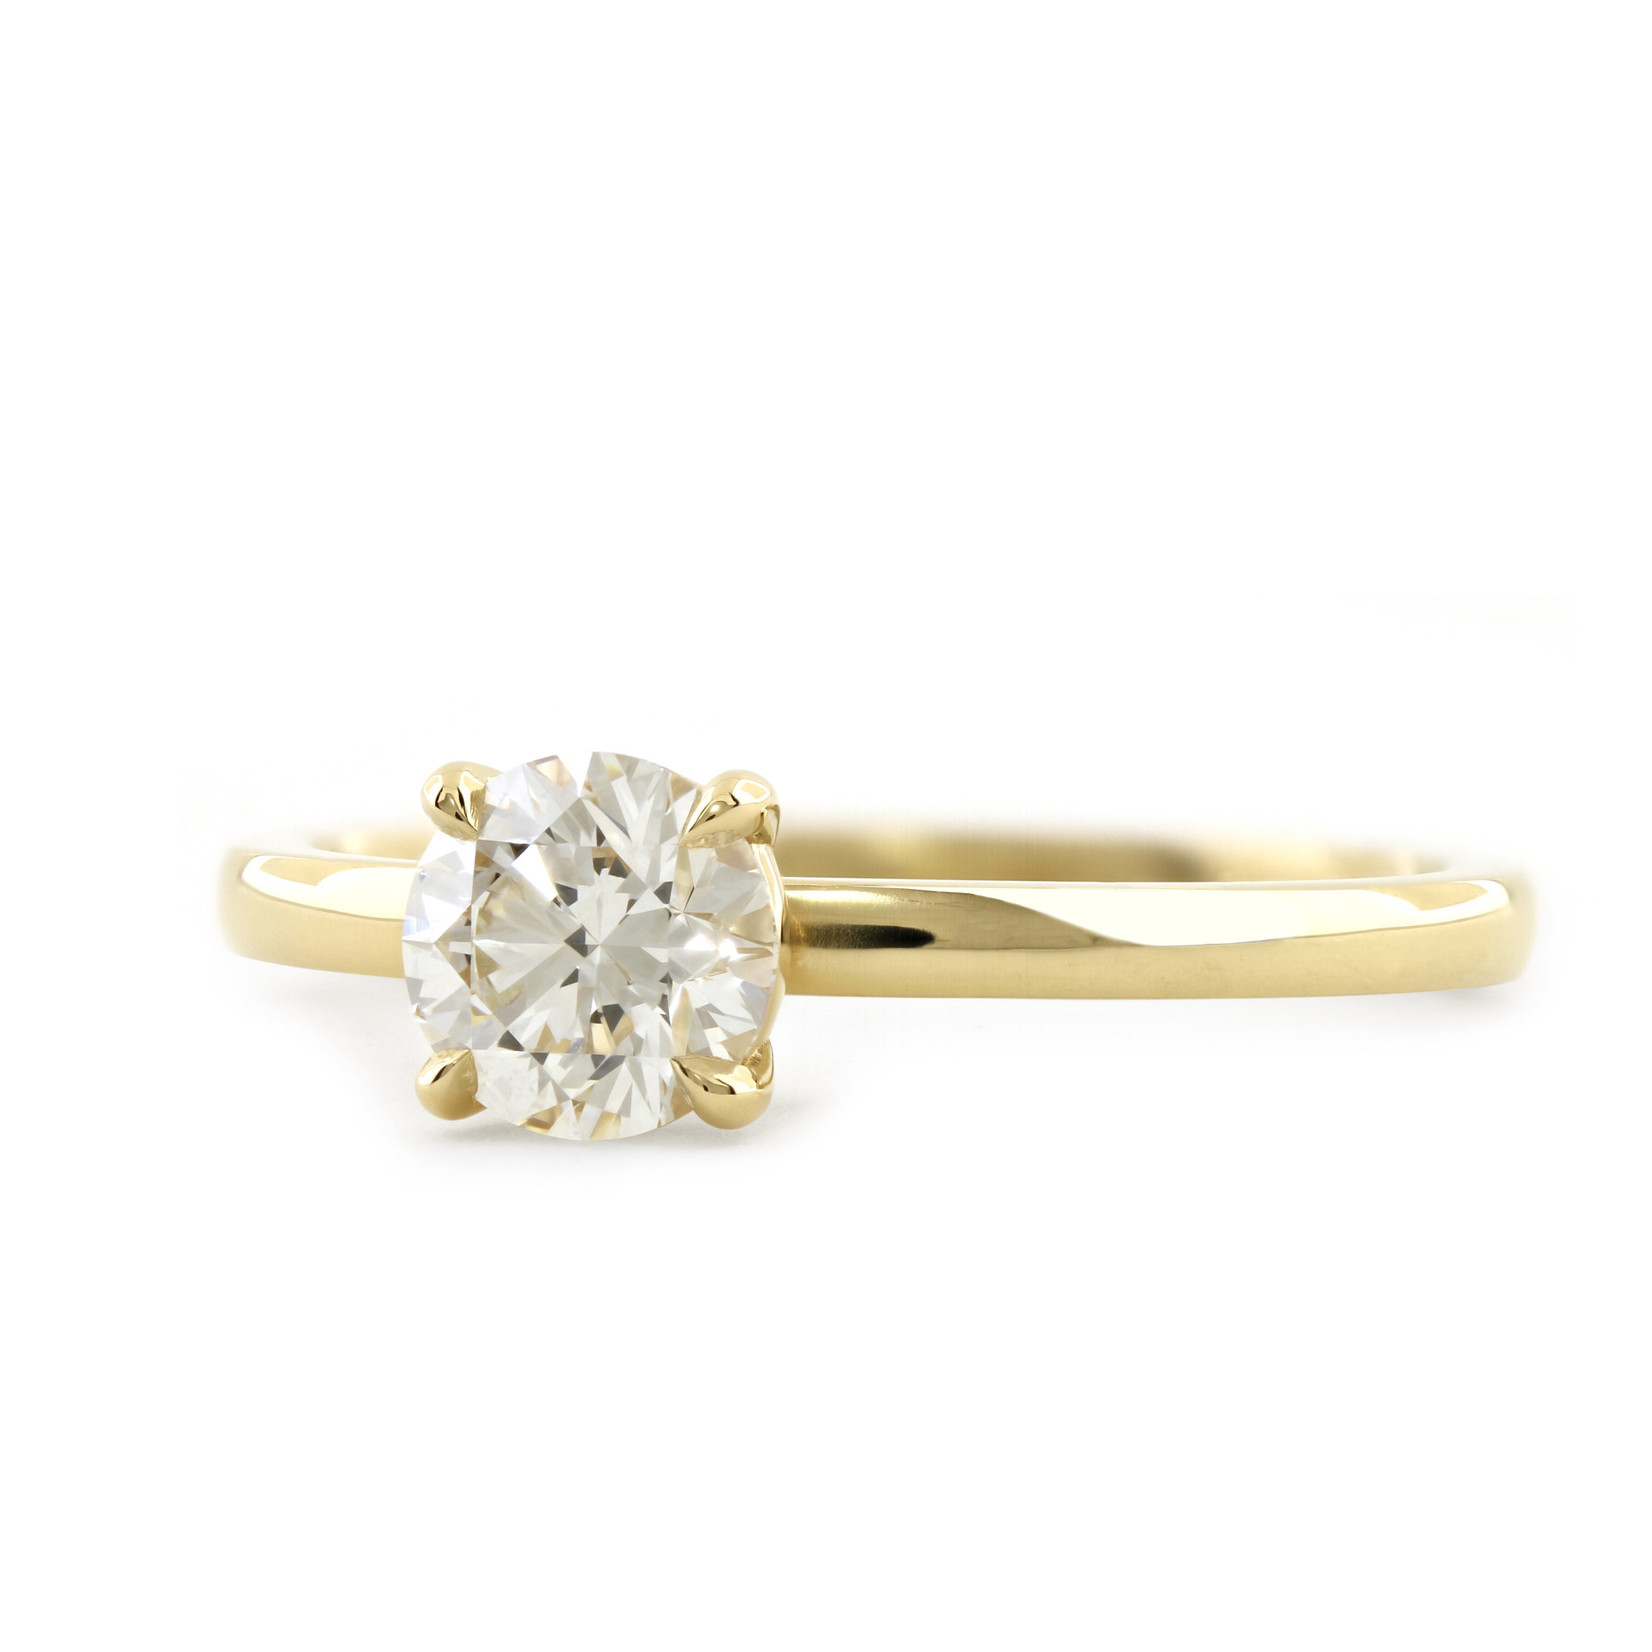 Baxter Moerman Chelsea Engagment Ring - Round Diamond